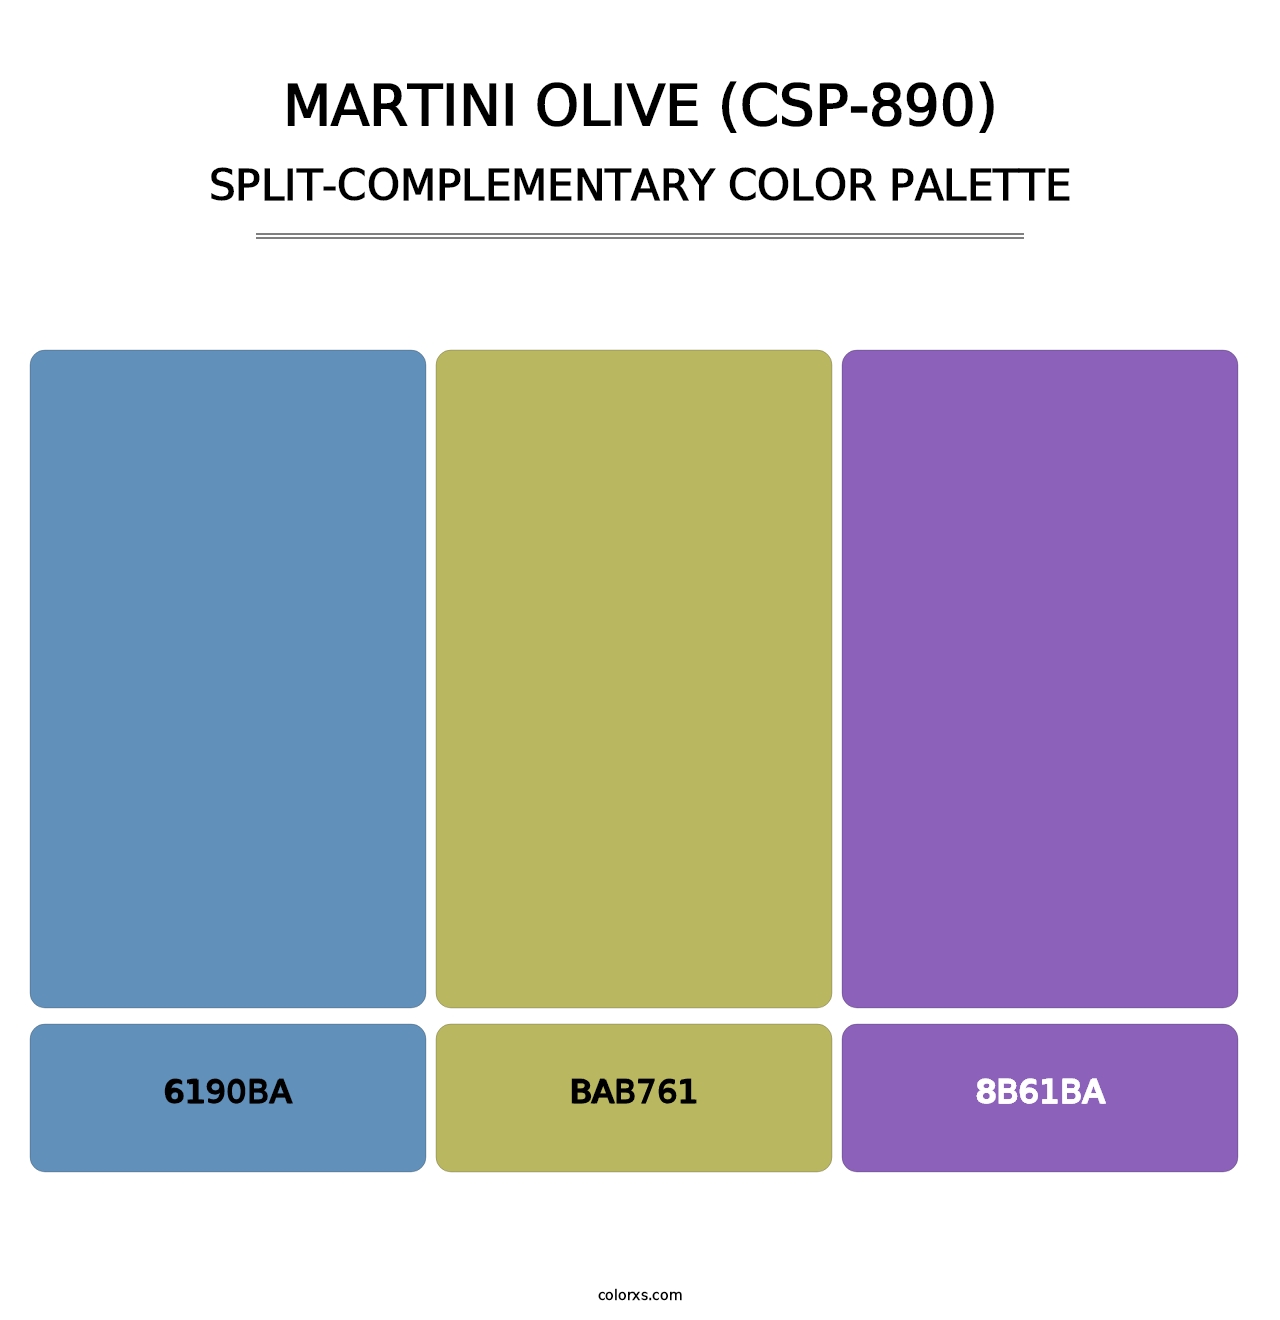 Martini Olive (CSP-890) - Split-Complementary Color Palette